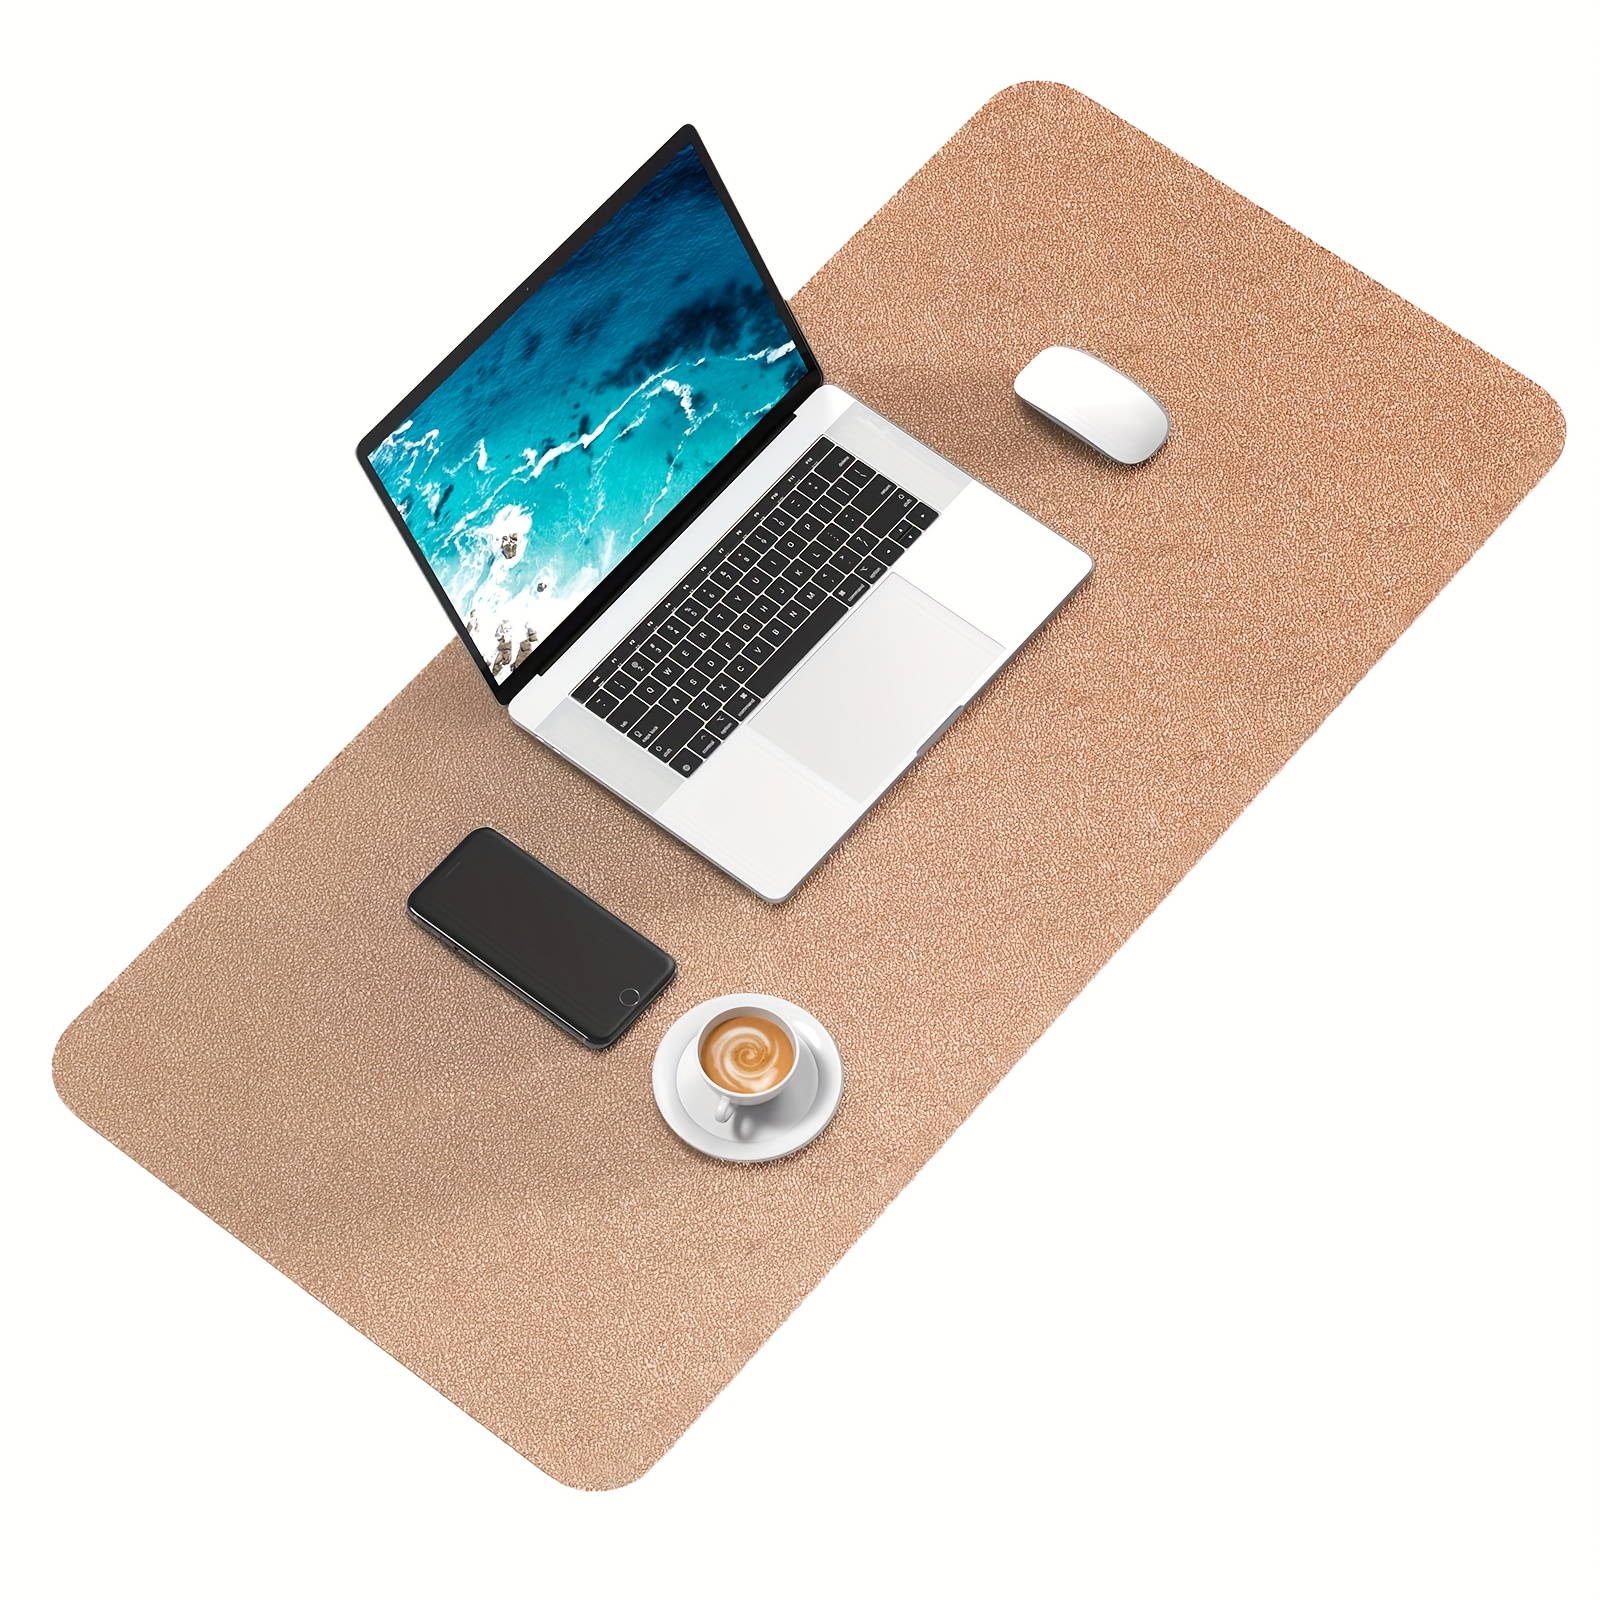 K KNODEL Desk Mat, Mouse Pad, 23.6 x 13.8, Light Blue